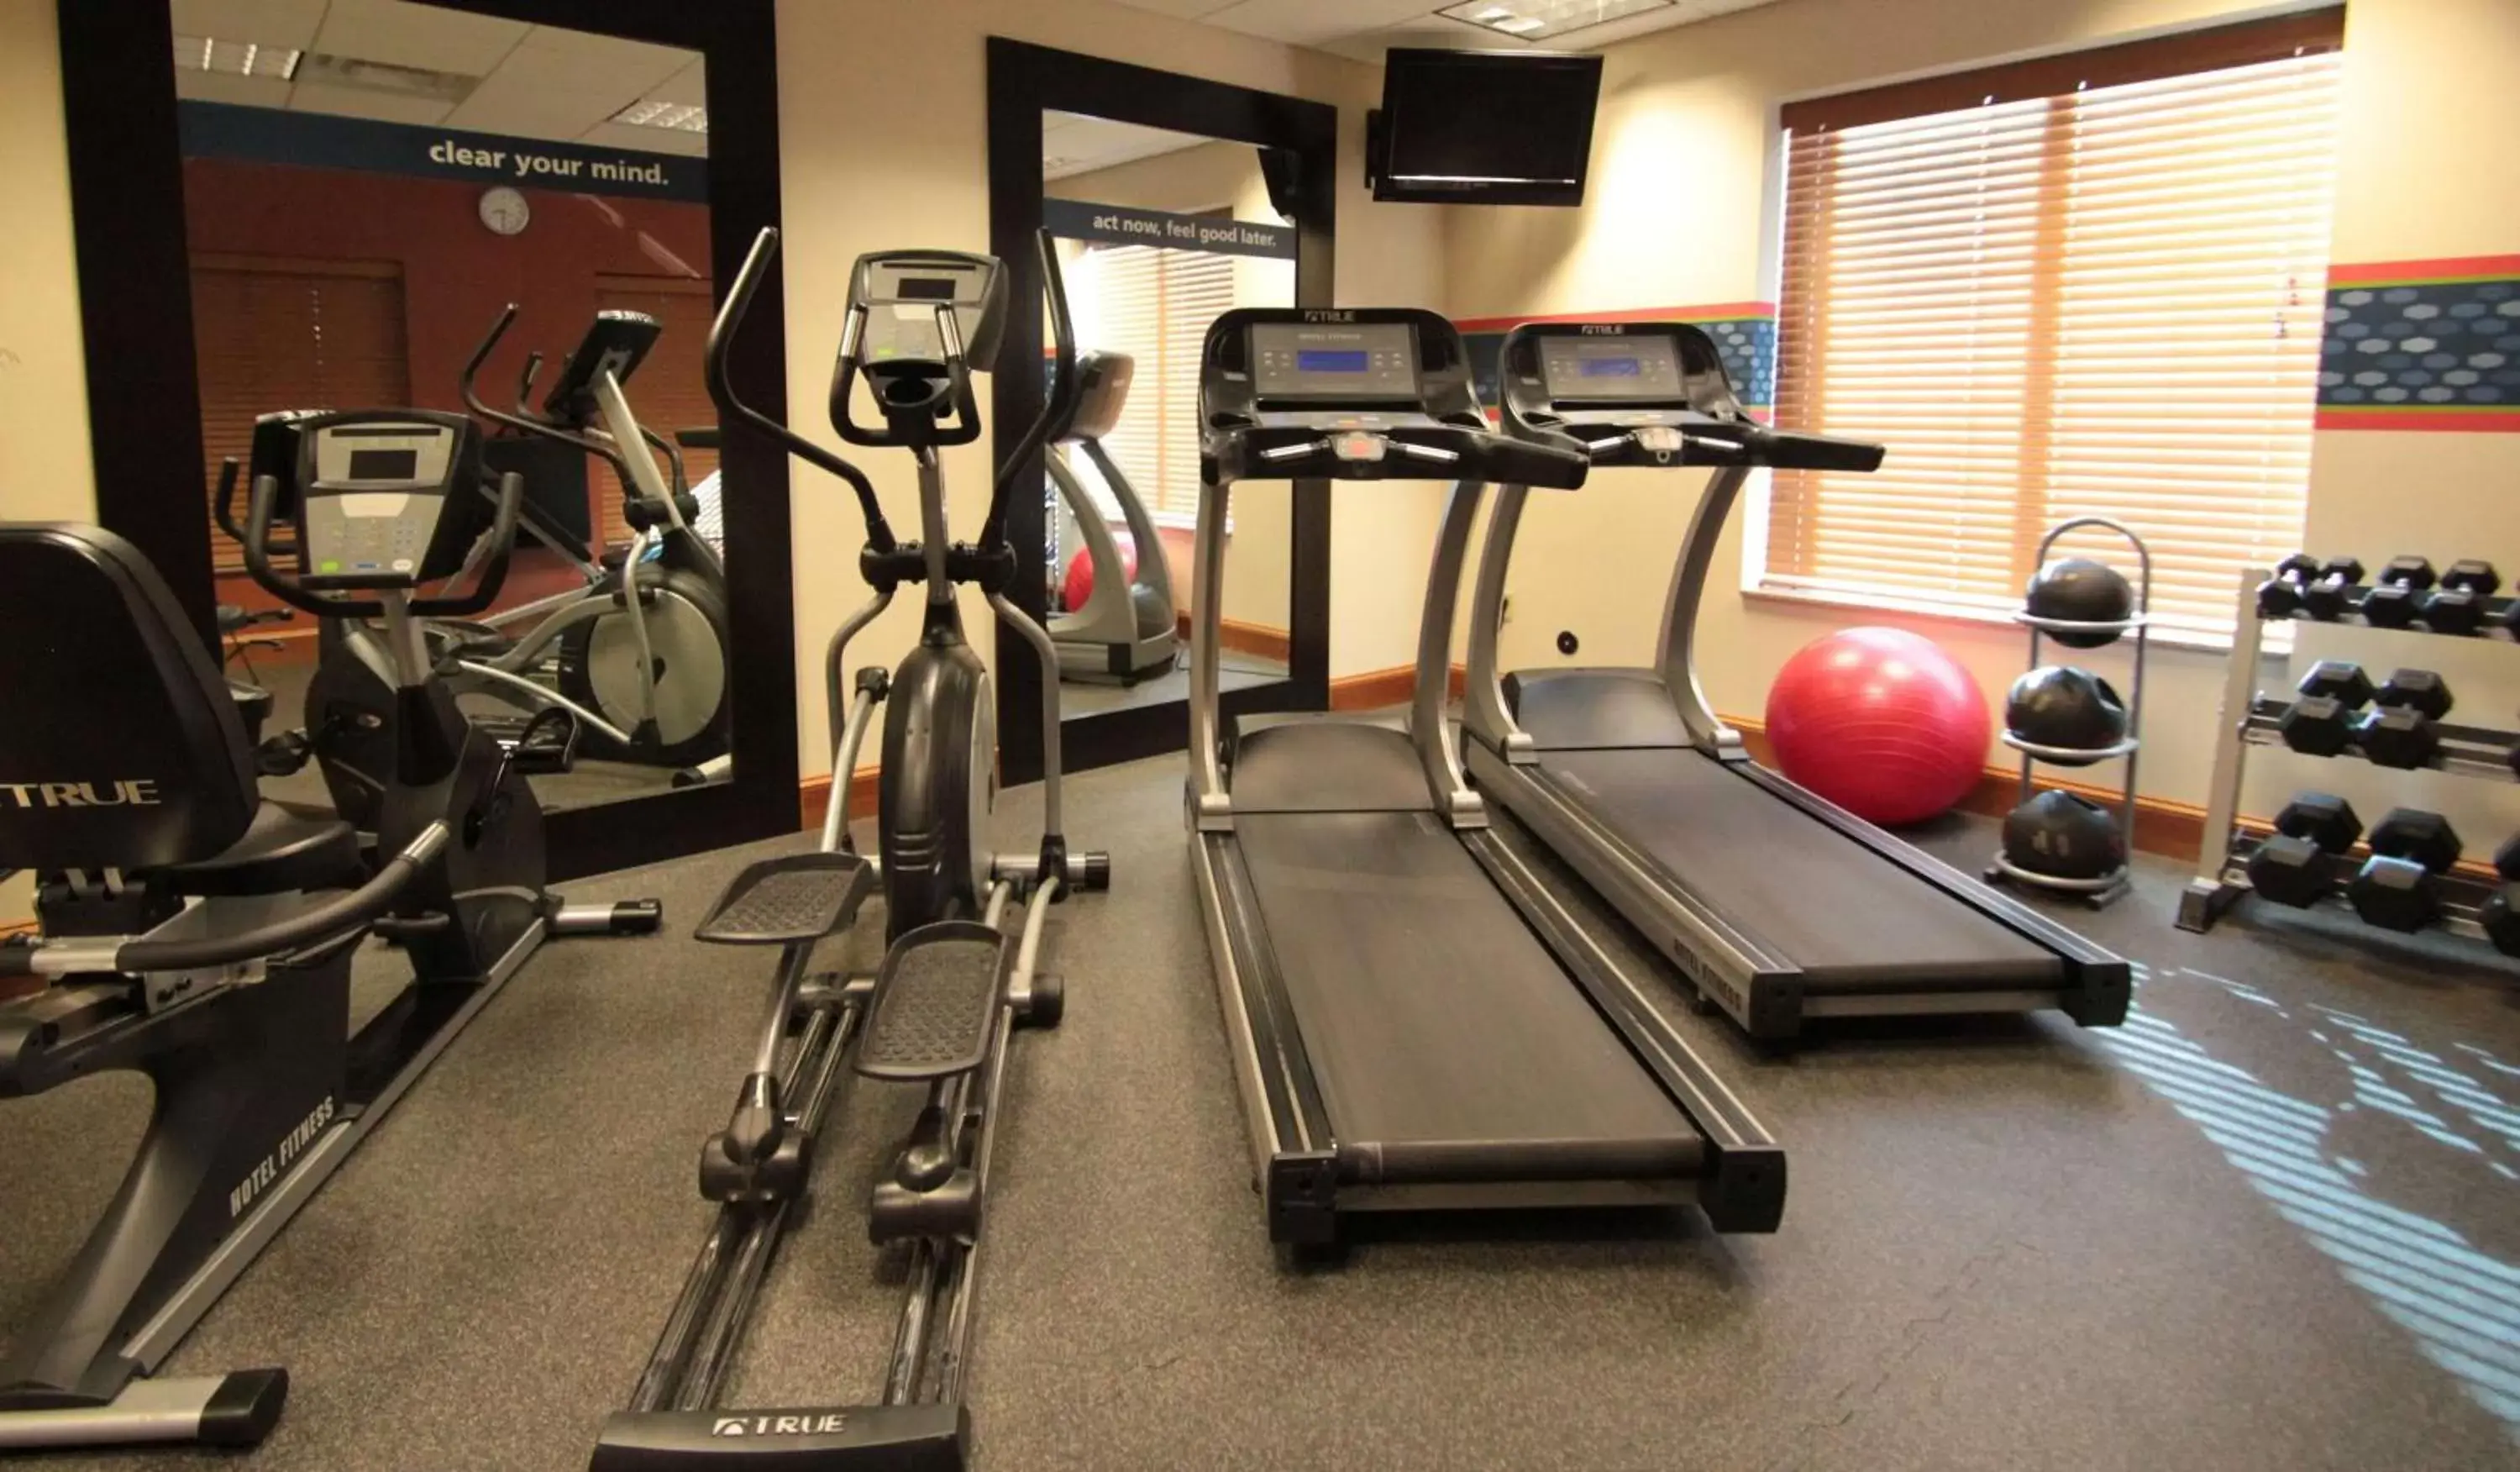 Fitness centre/facilities, Fitness Center/Facilities in Hampton Inn Hampton-Newport News